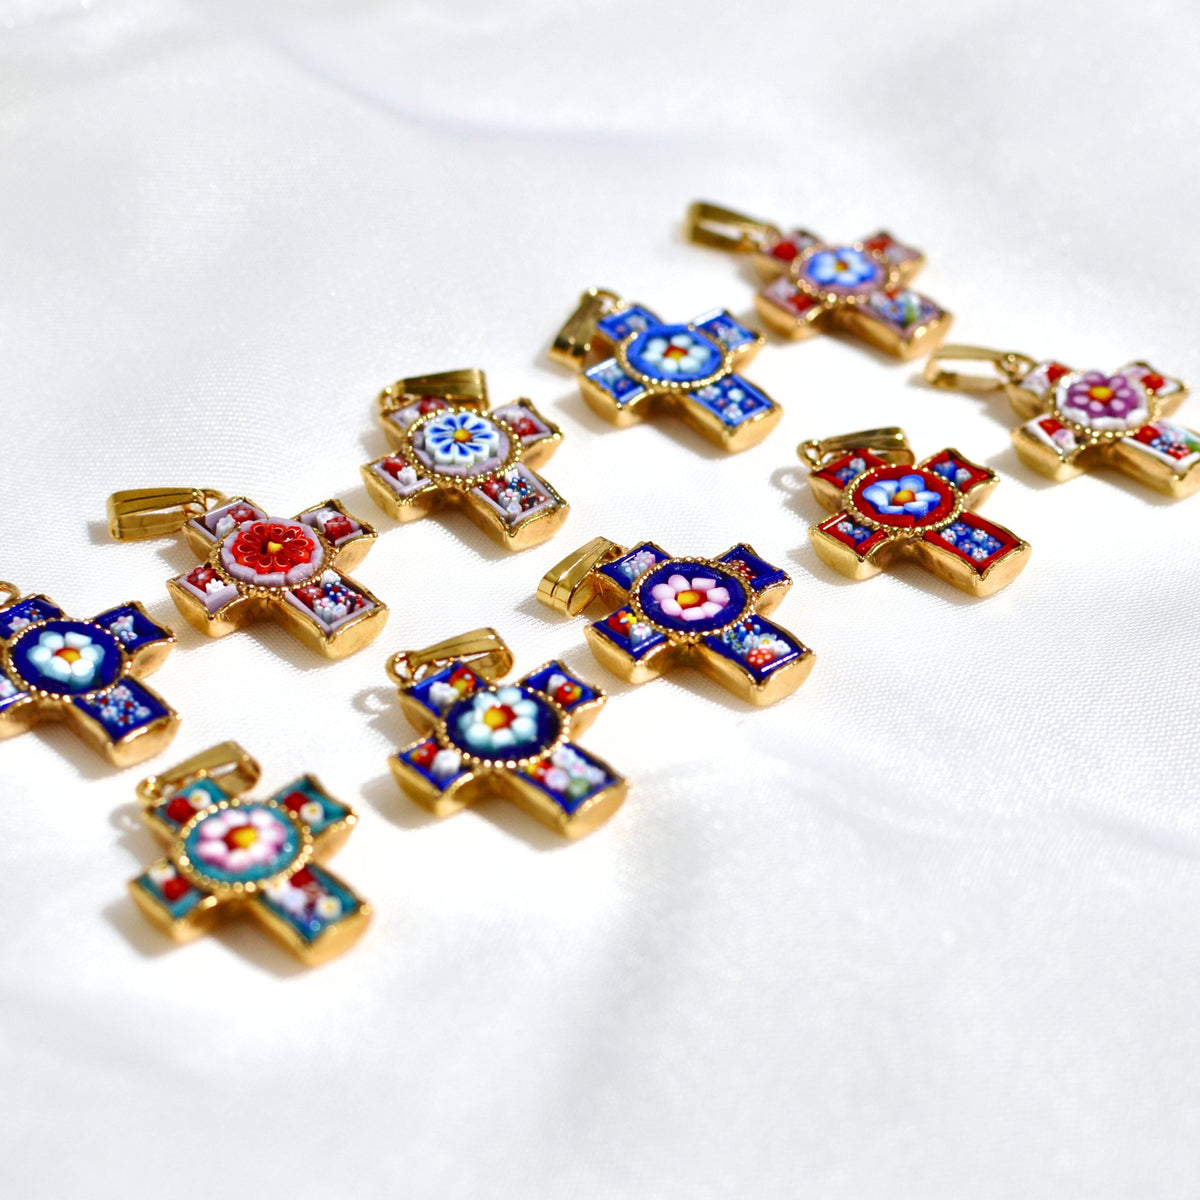 Florentine Mosaic Cross Pendant Necklace, Mini, Made In Italy - My Italian Decor